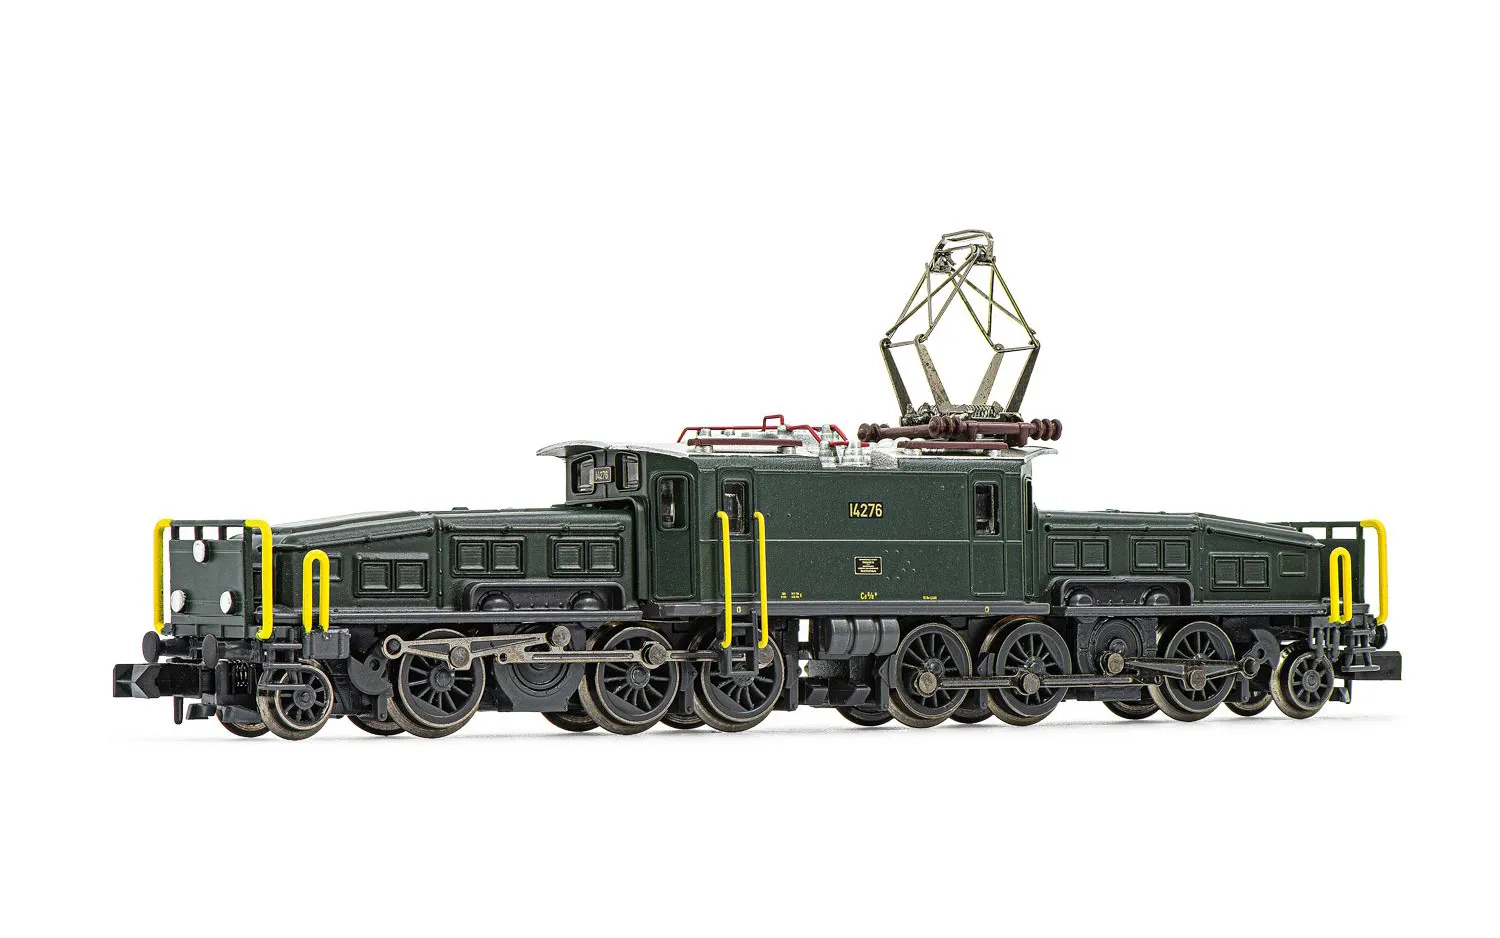 SBB, Elektrolokomotive Ce 6/8 II 14276 "Krokodil", in grüner Lackierung, Ausführung als Rangierlokomotive, Ep. IV